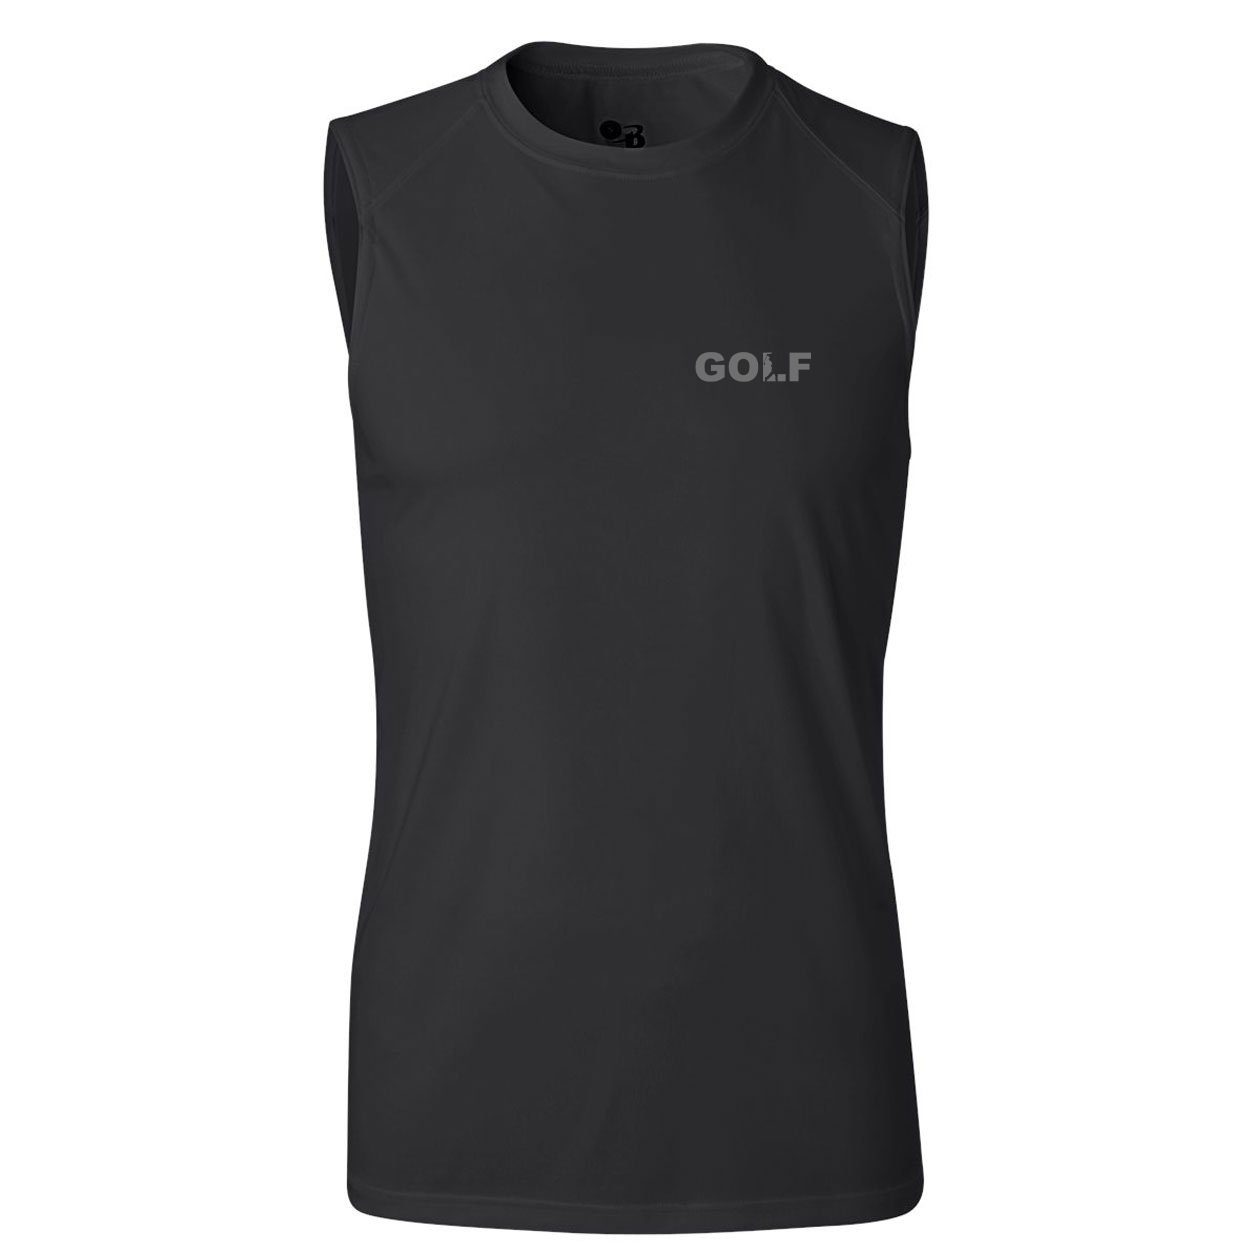 Golf Swing Logo Night Out Unisex Performance Sleeveless T-Shirt Black (Gray Logo)